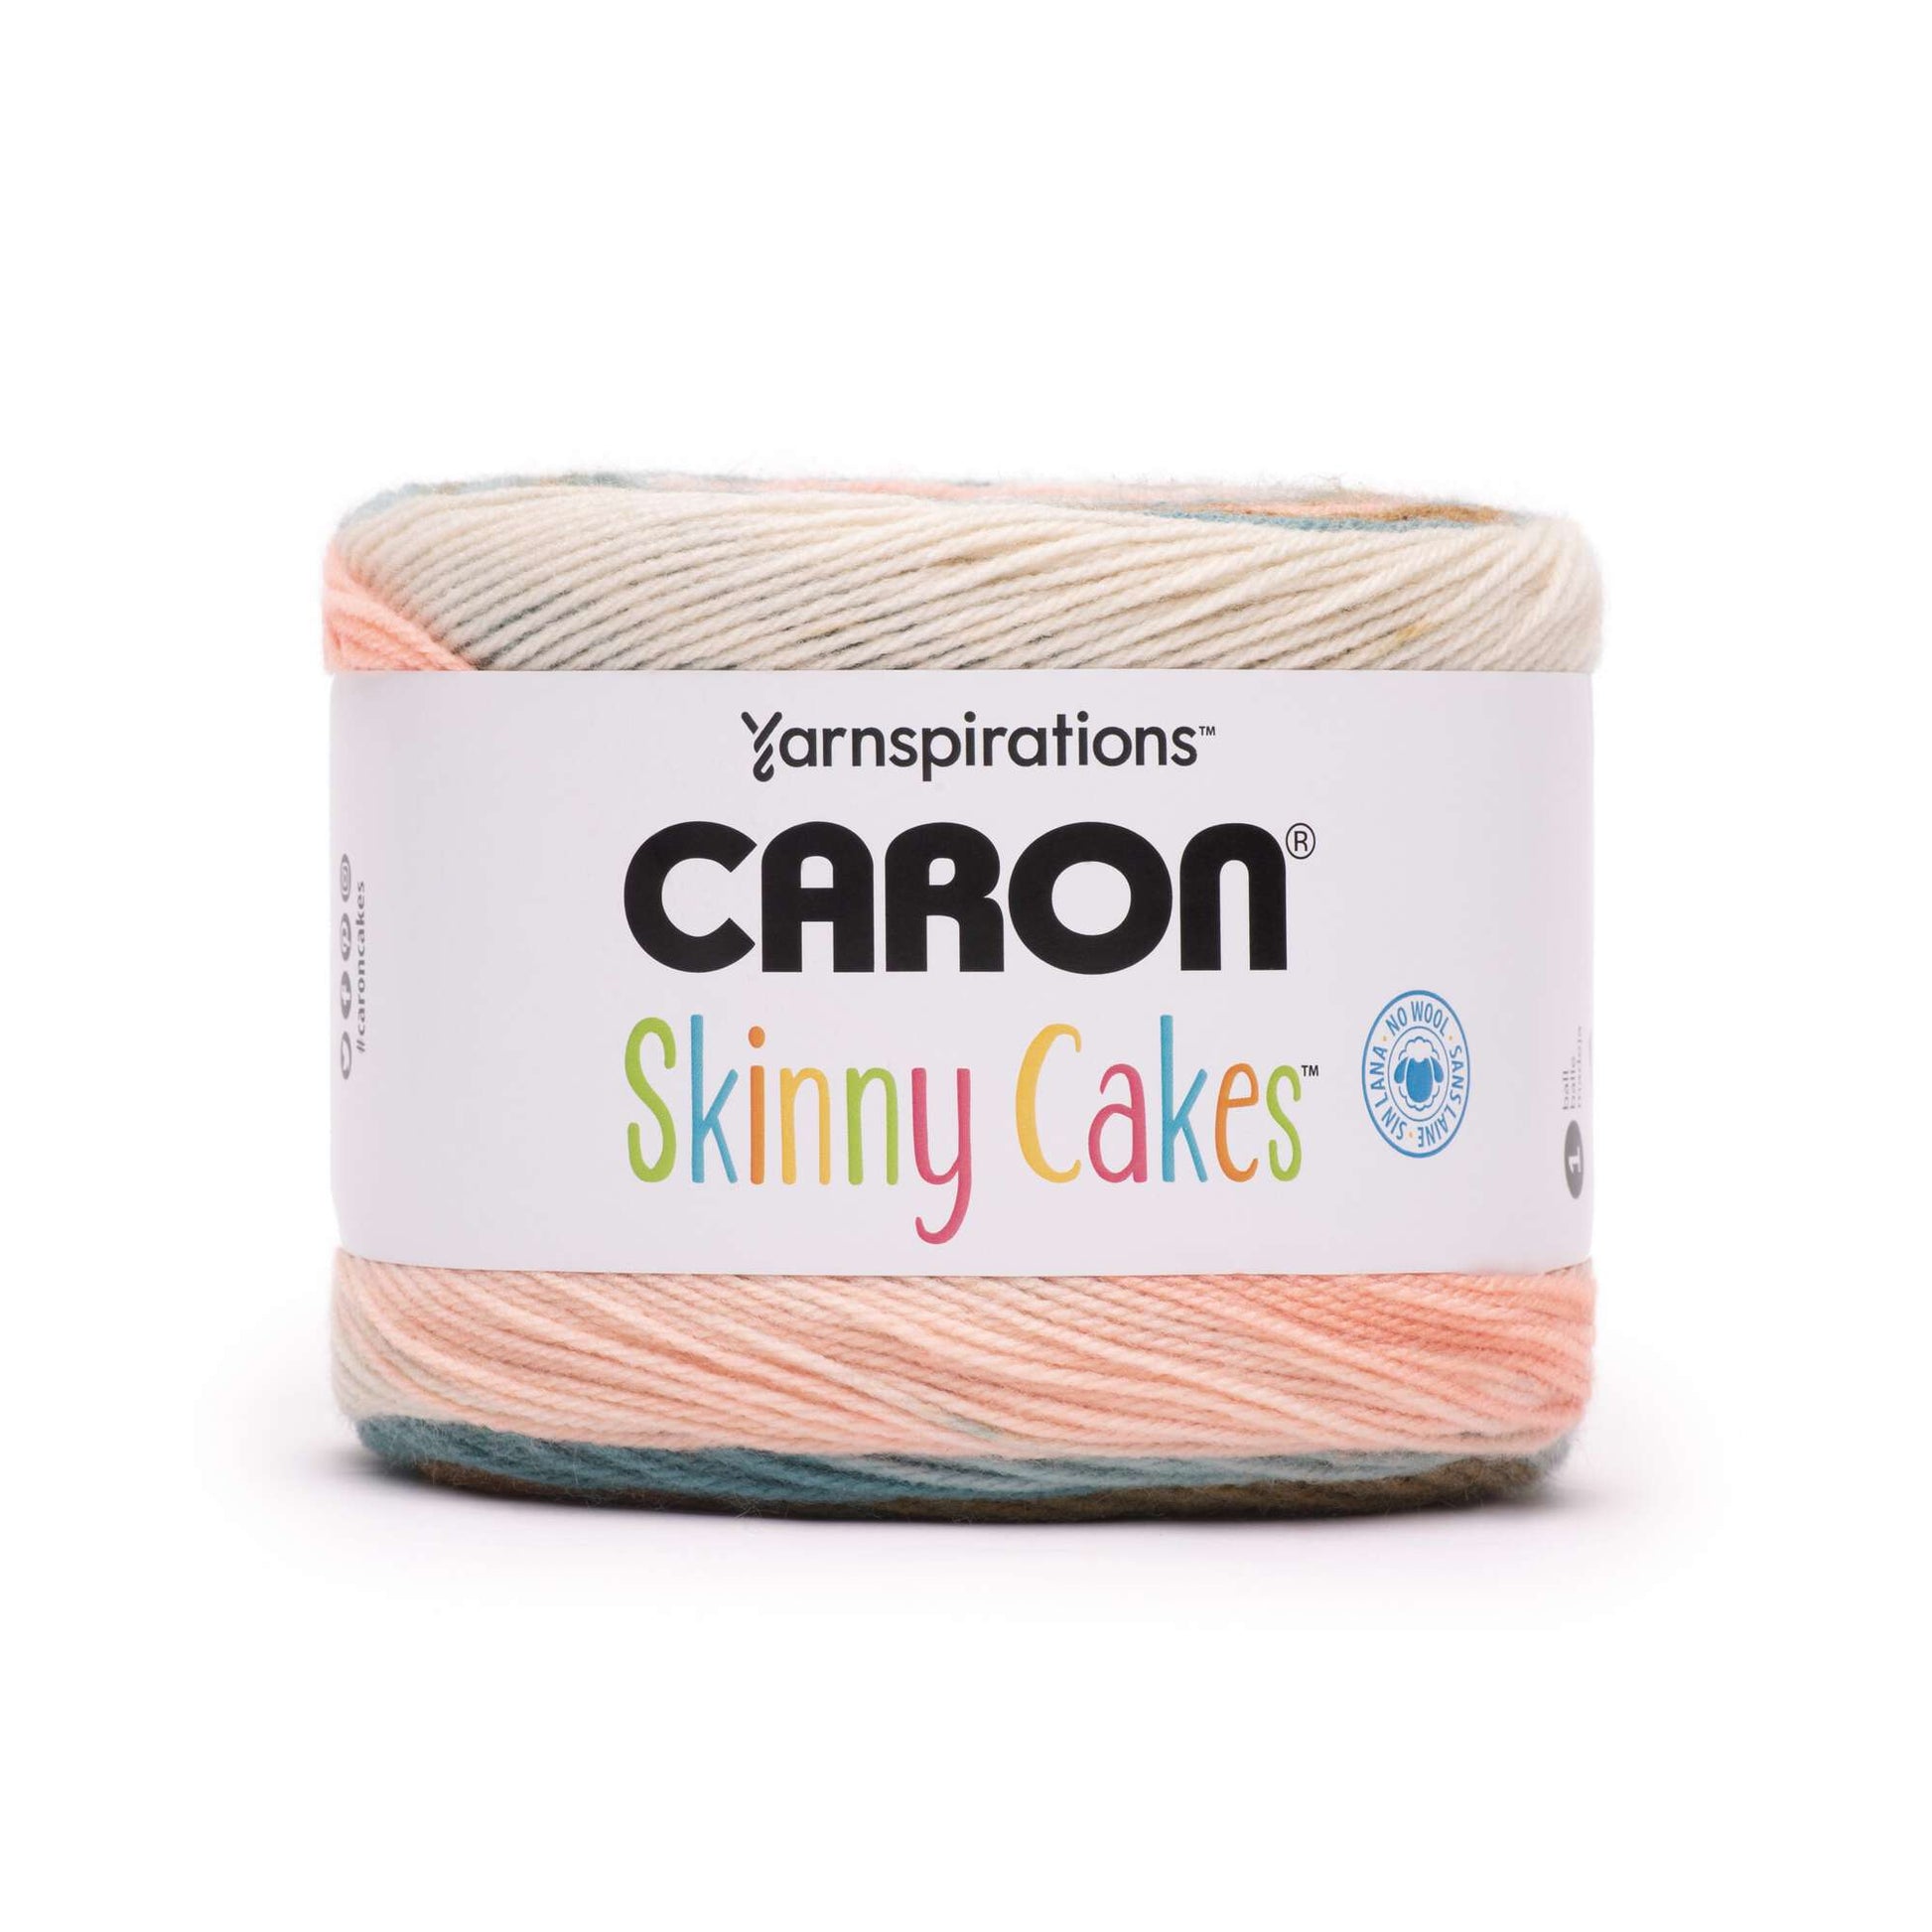 Caron Big Cakes Yarn, Yarnspirations in 2023